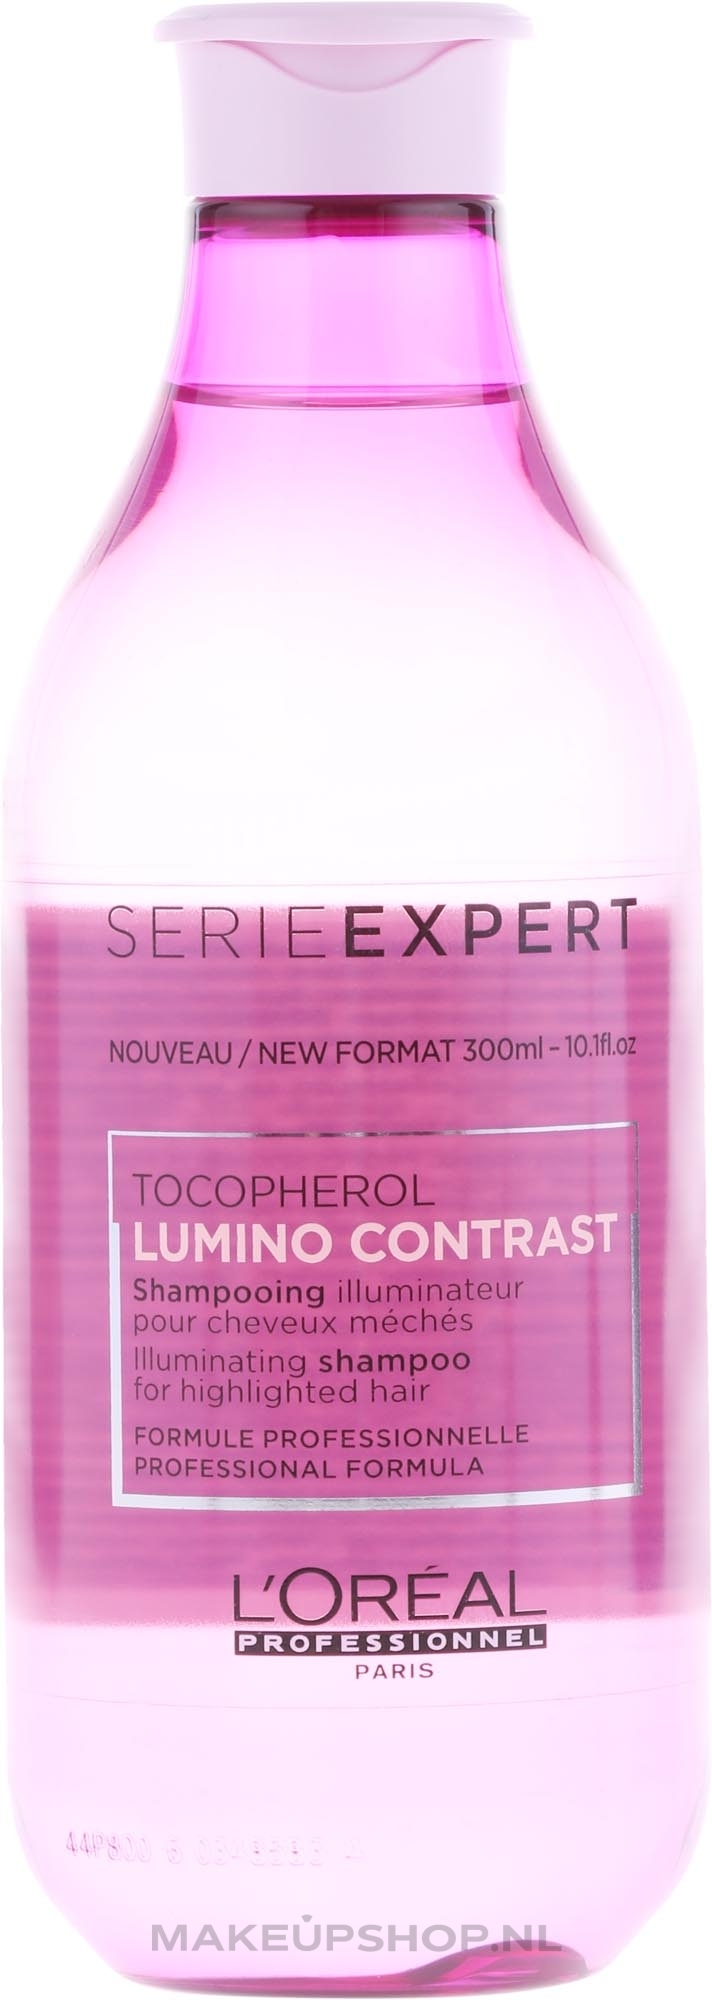 szampon lumino contrast 1500 ml